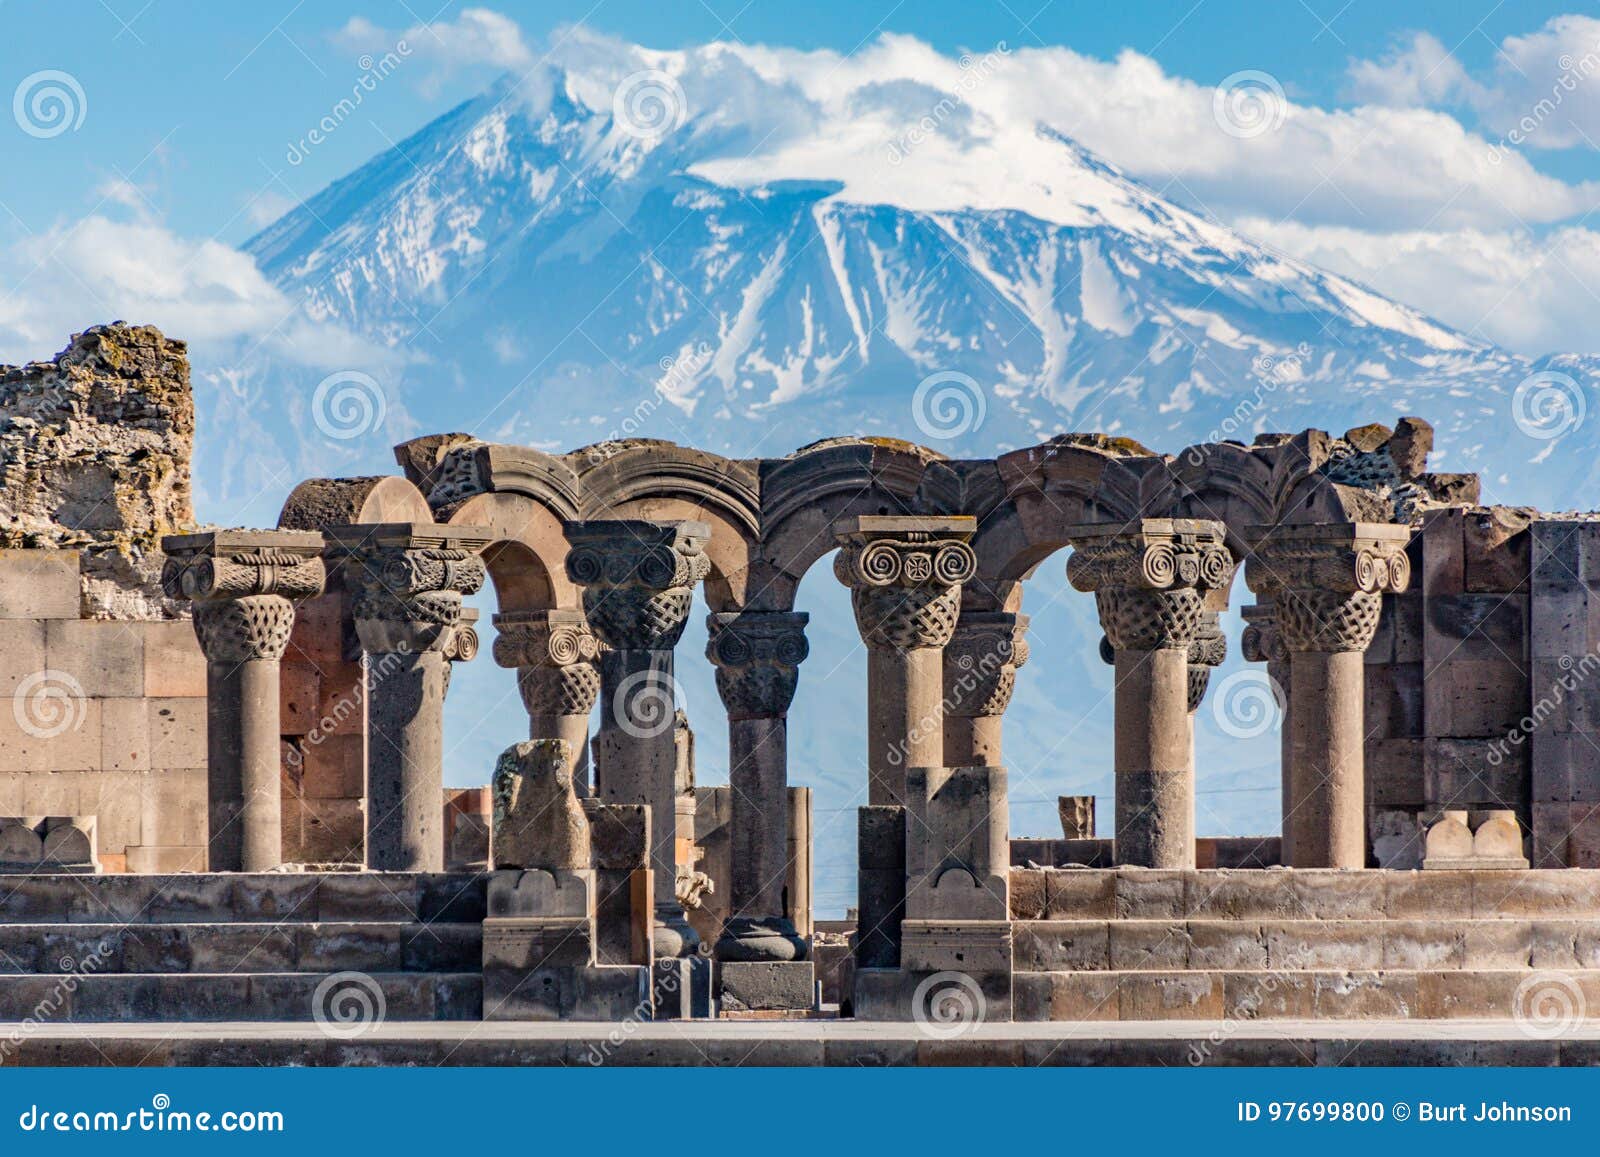 ruins of the zvartnos temple in yerevan, armenia